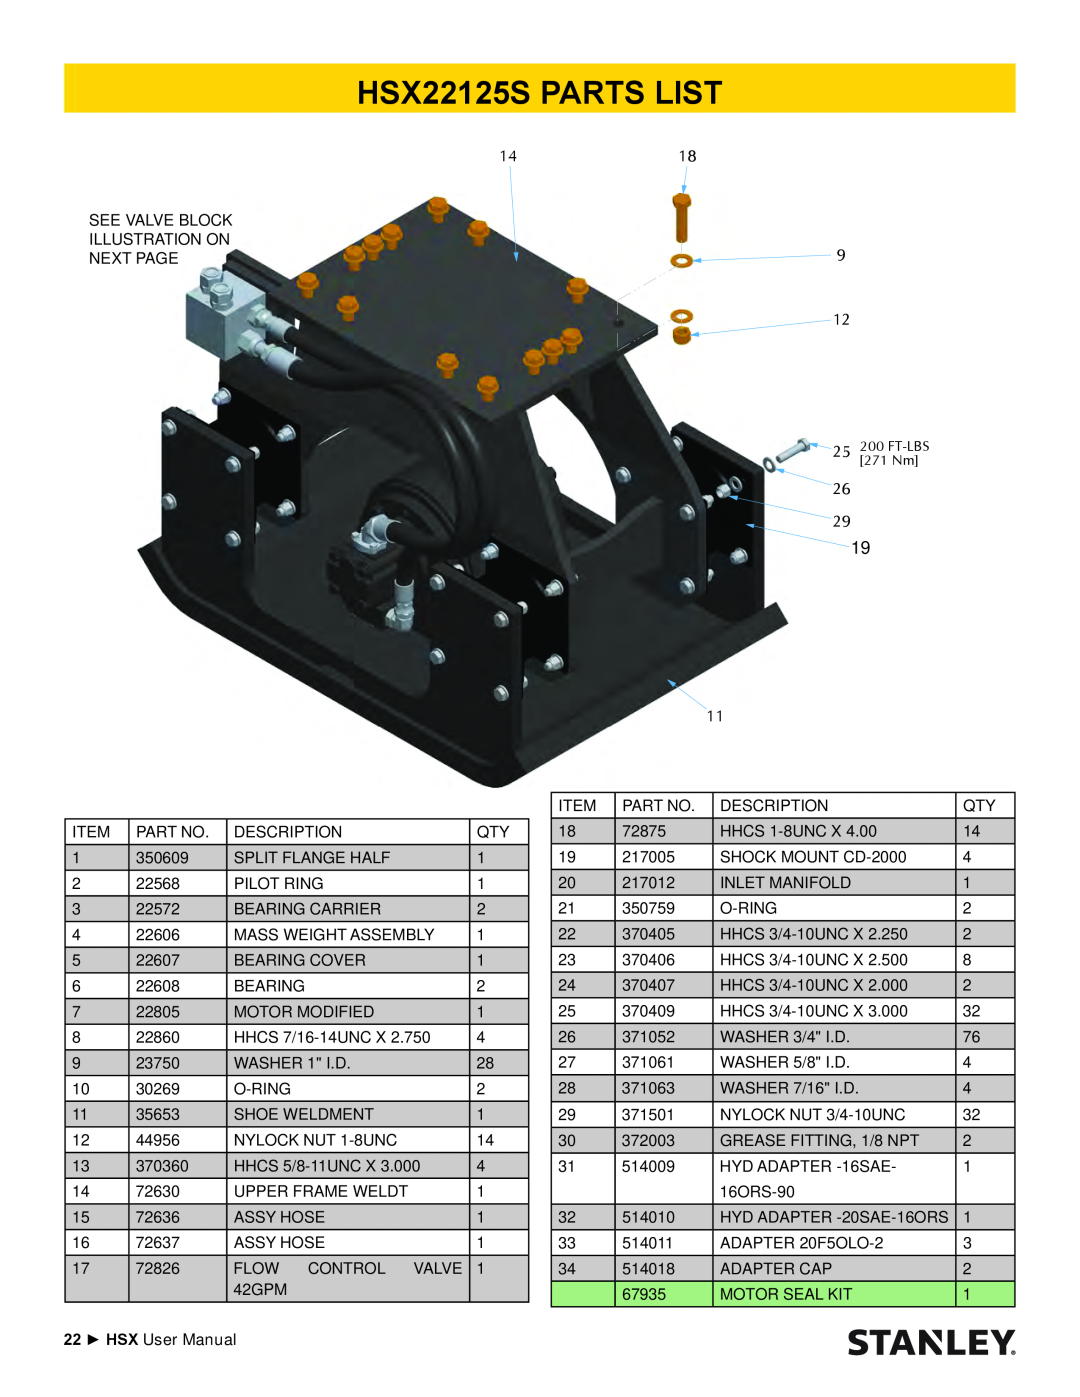 Stanley Black & Decker HSX SERIES user manual HSX22125S PARTS LIST, 25 200 FT-LBS 271 Nm 